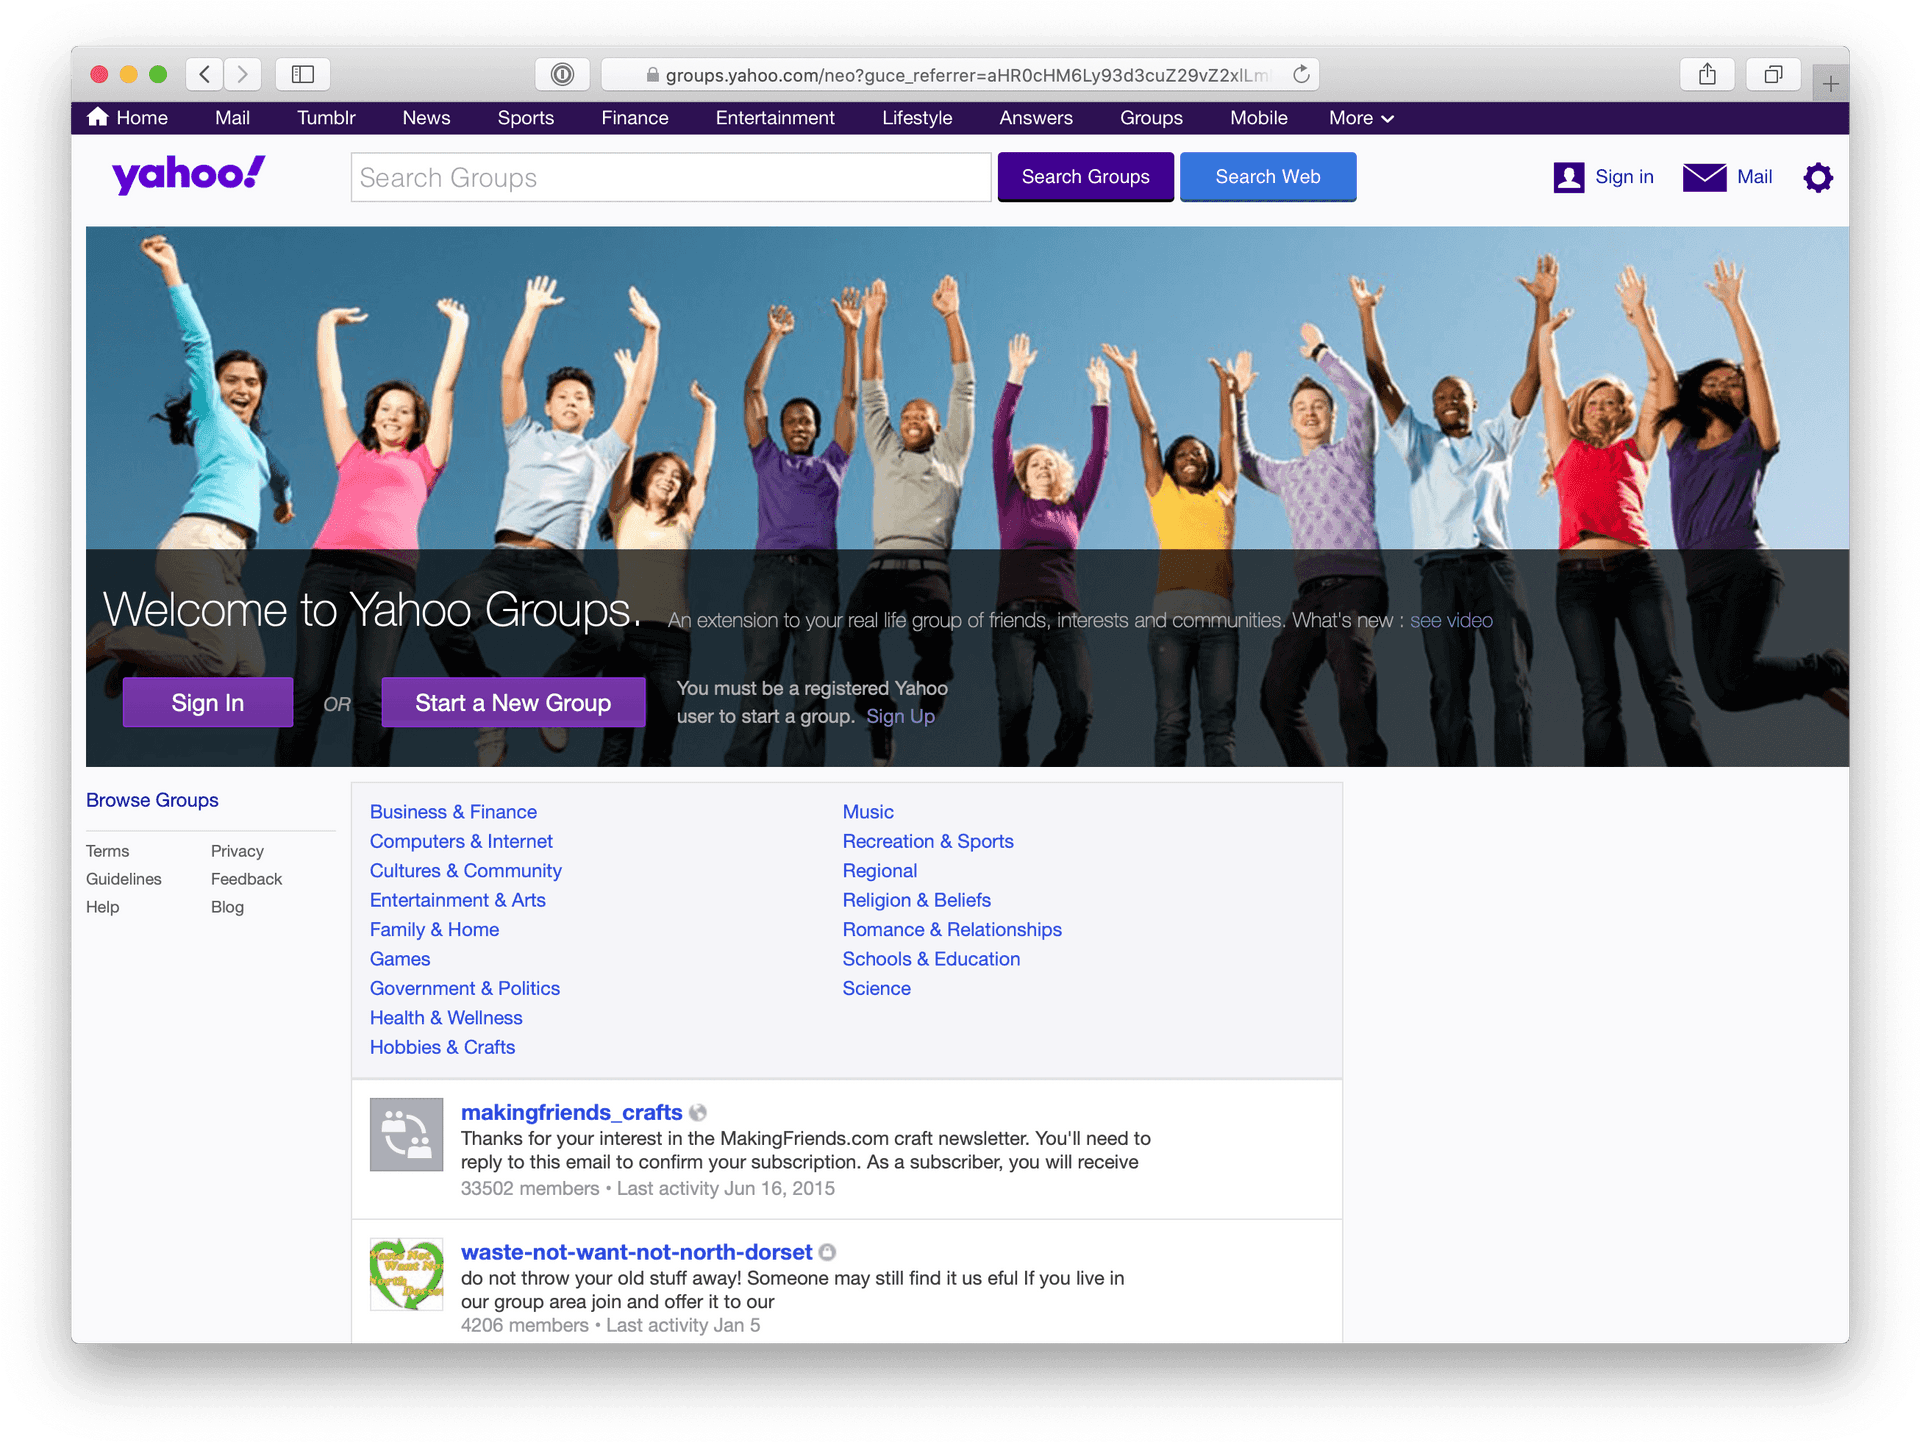 Diverse Group Celebrating Yahoo Groups PNG image